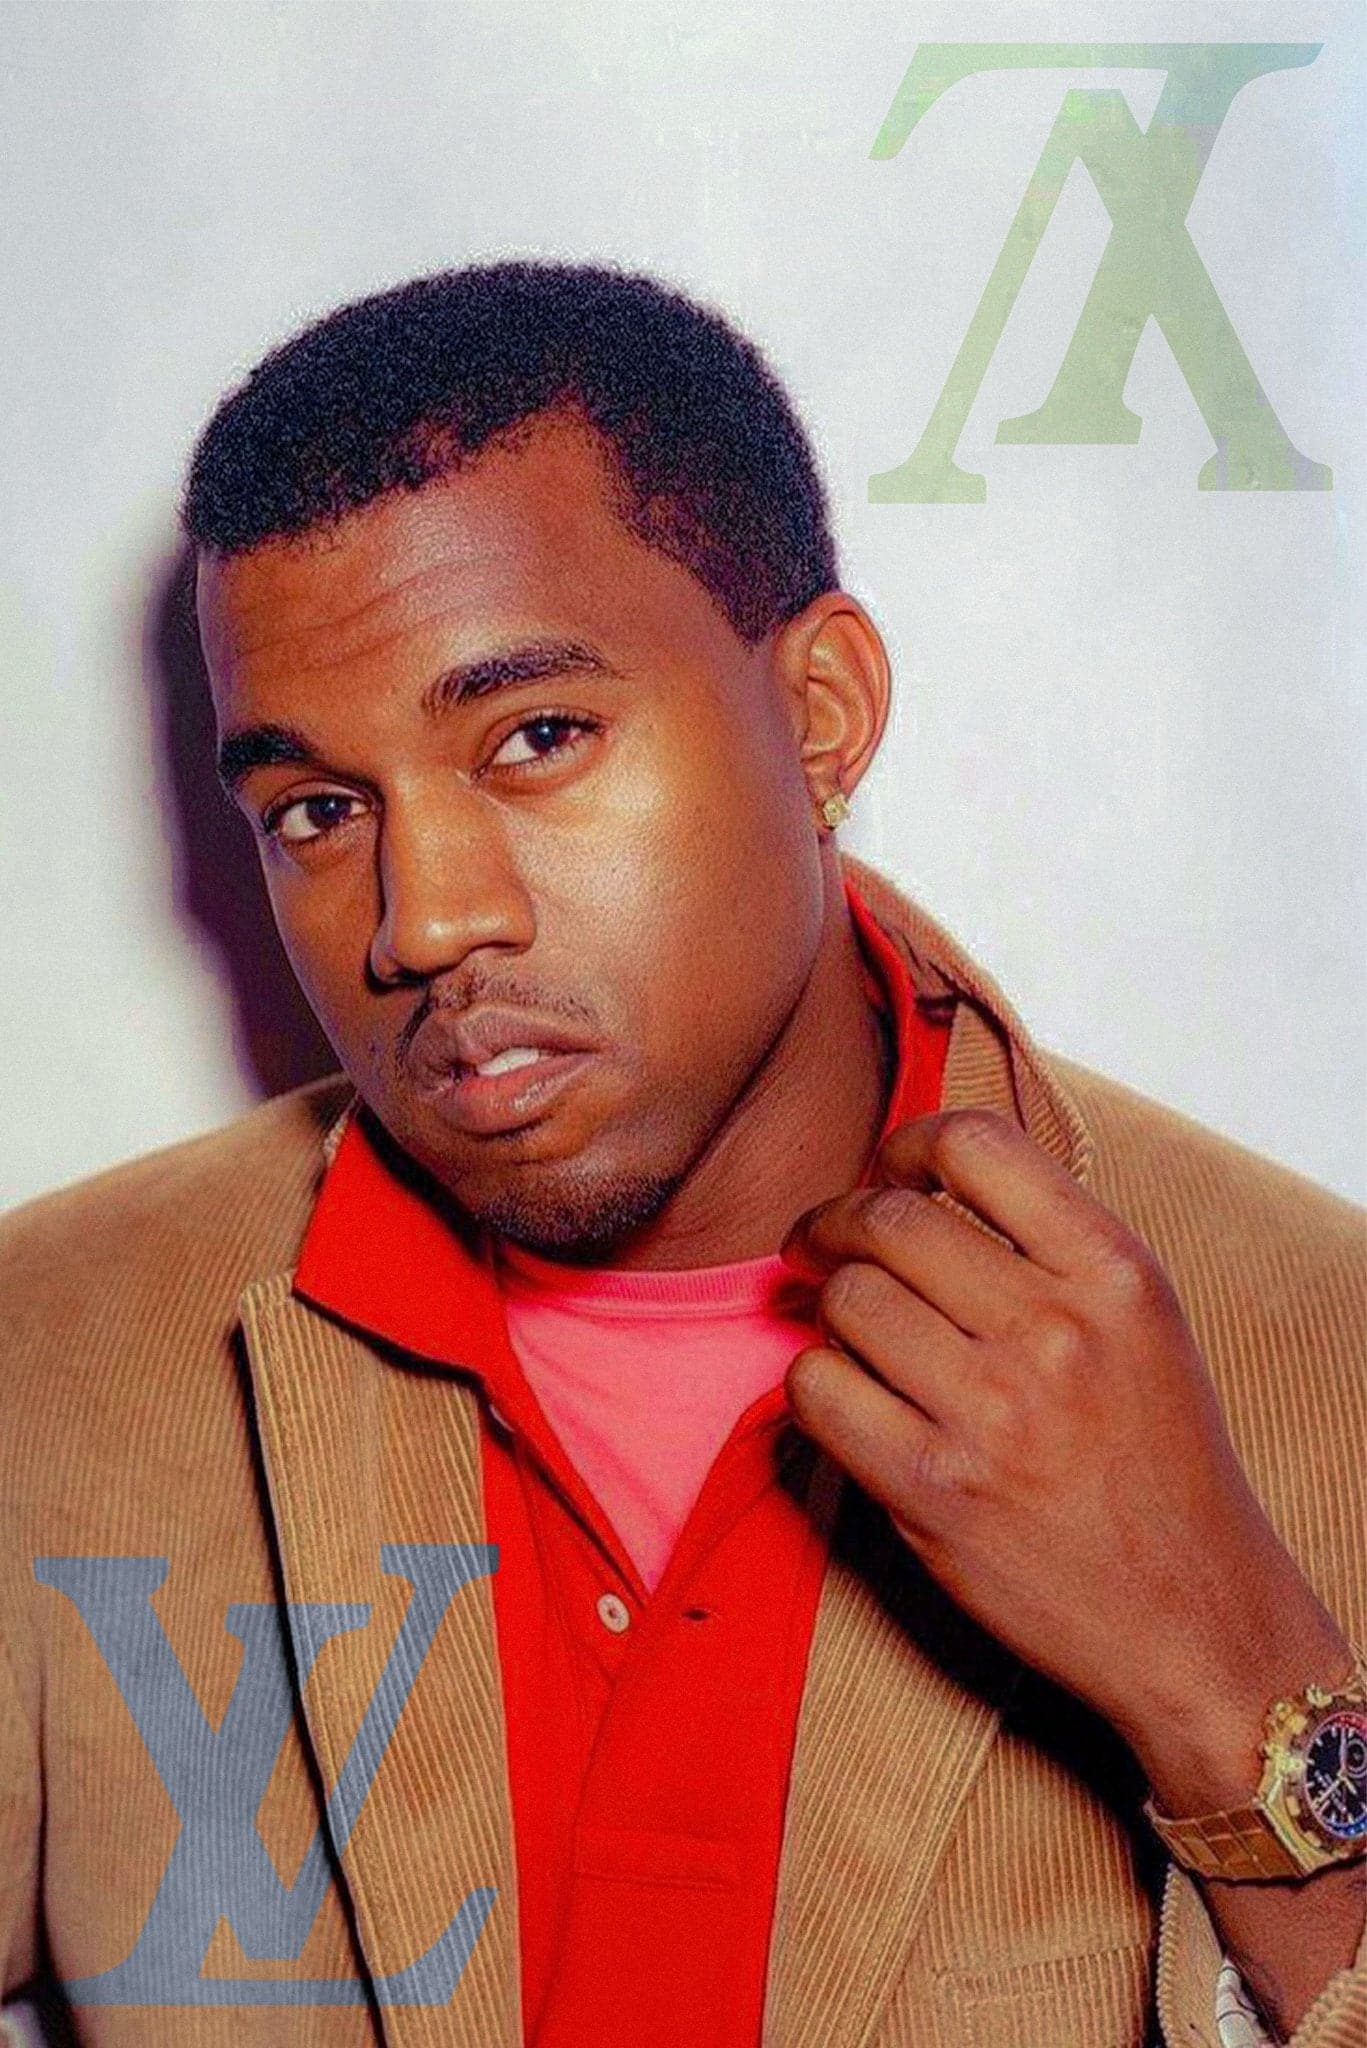 Kanye West 'LV' Poster – Posters Plug